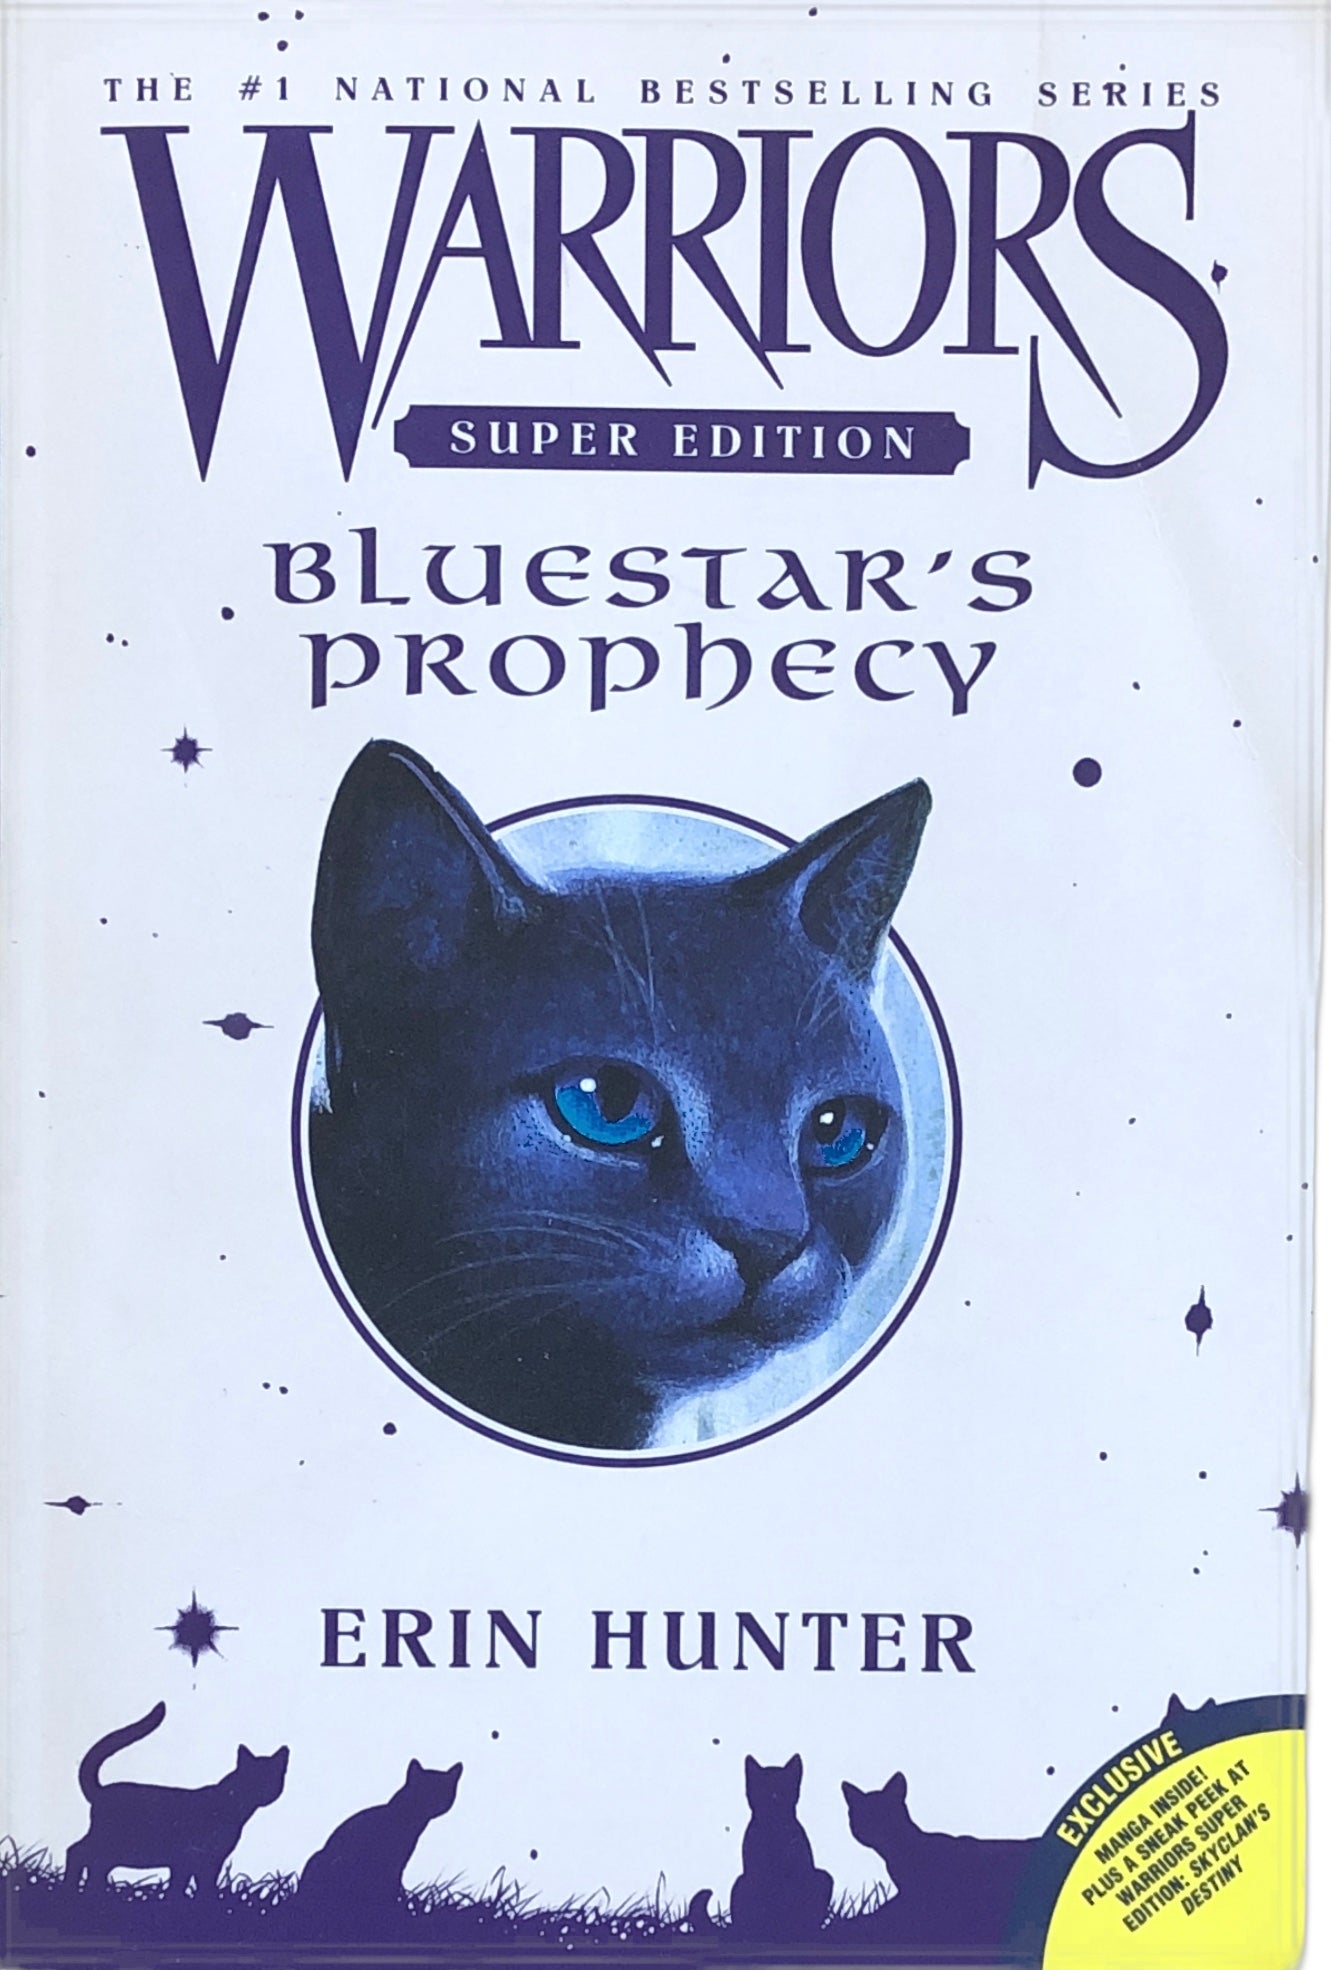 Warriors: Moonrise (The New Prophecy Book #2) by Erin Hunter – nerdnookbooks